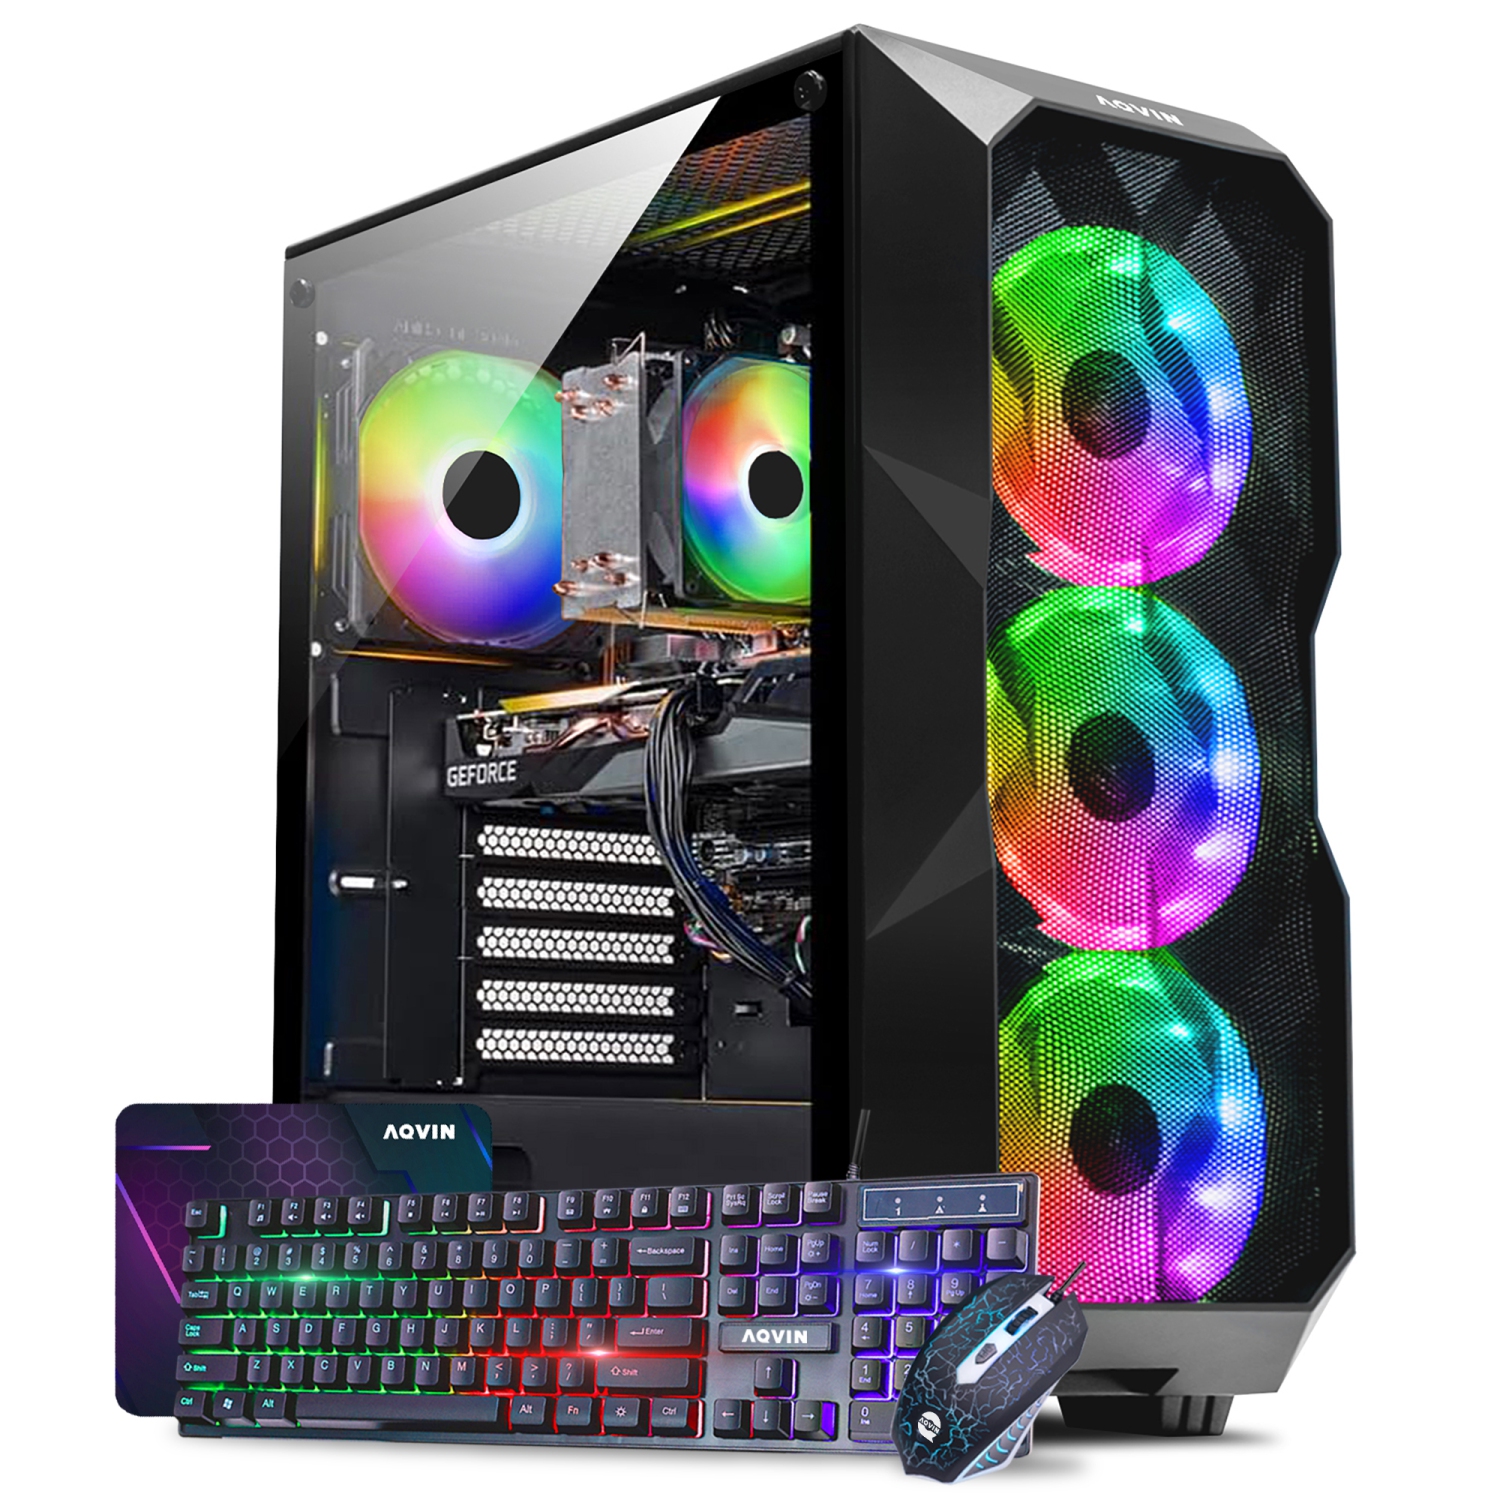 AQVIN Prebuilt Gaming PC Desktop Computer, GeForce GTX 1660 Super 6GB, Intel Core i7 Processor, 32GB DDR4 RAM, 2000GB (Fast Boot) SSD, WIN 10 Pro, Gaming Keyboard and Mouse (AQB70)